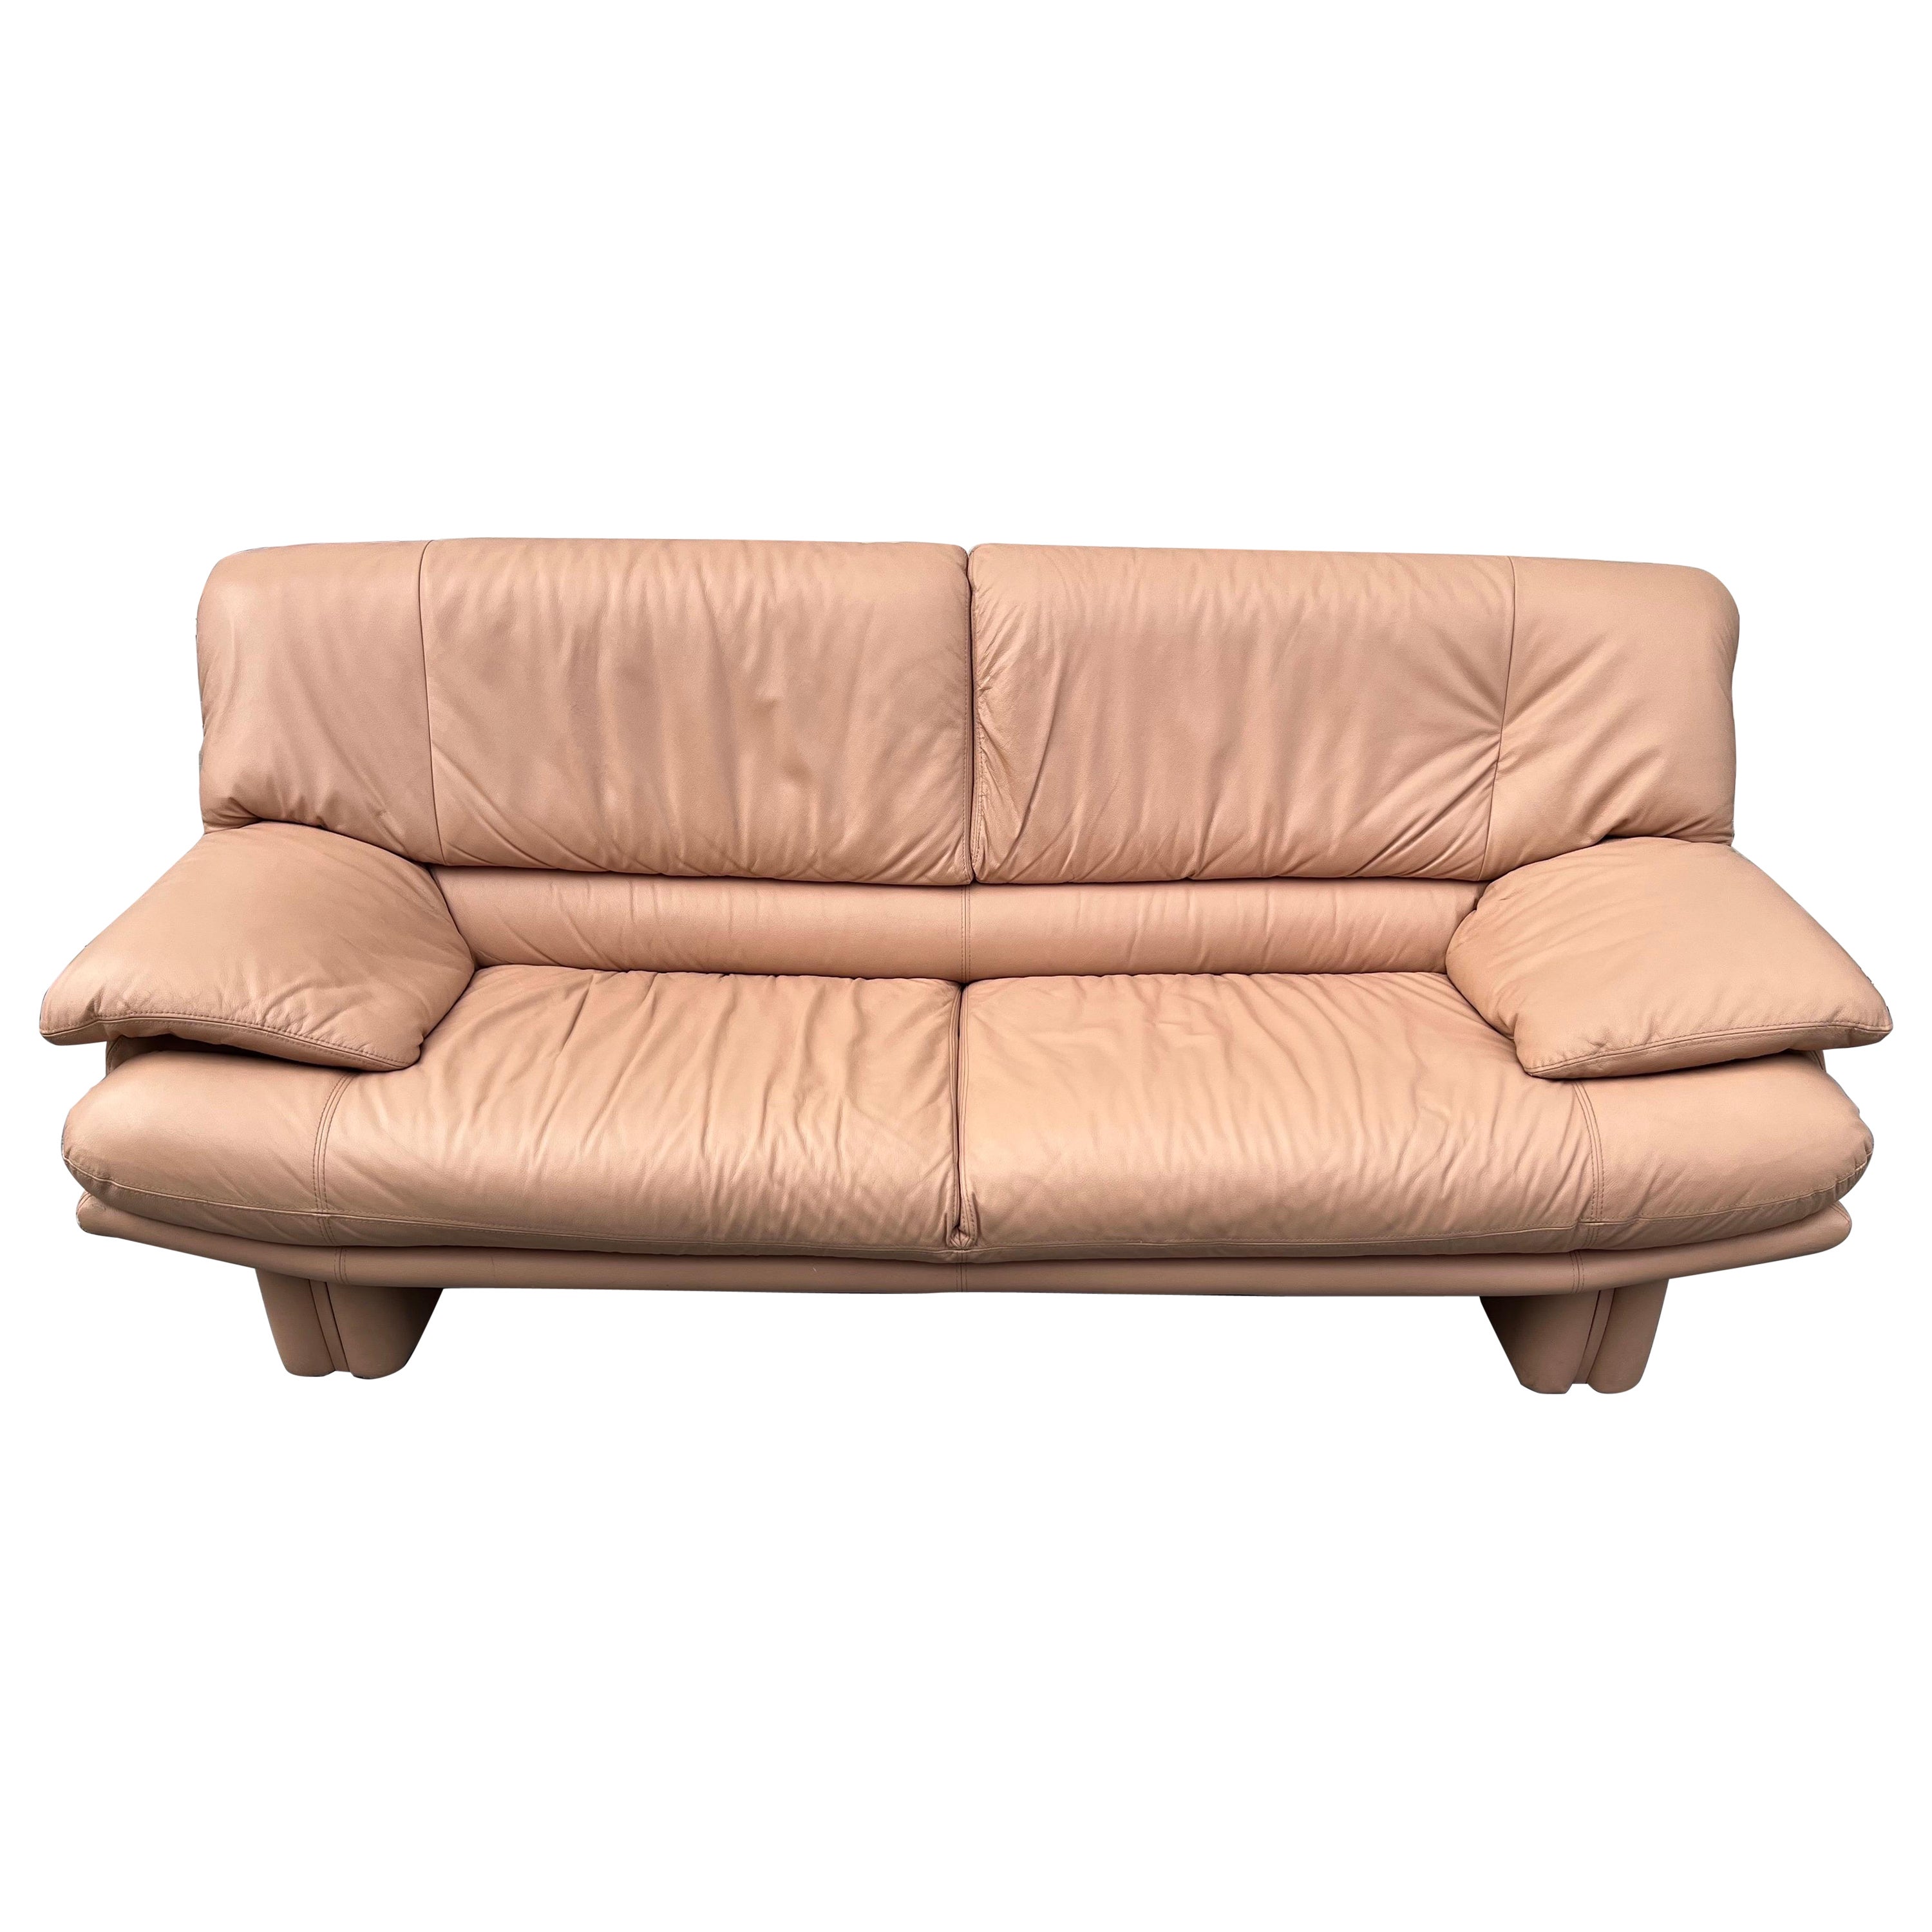 1980 Postmodern Peach Neutral Leather Sofa